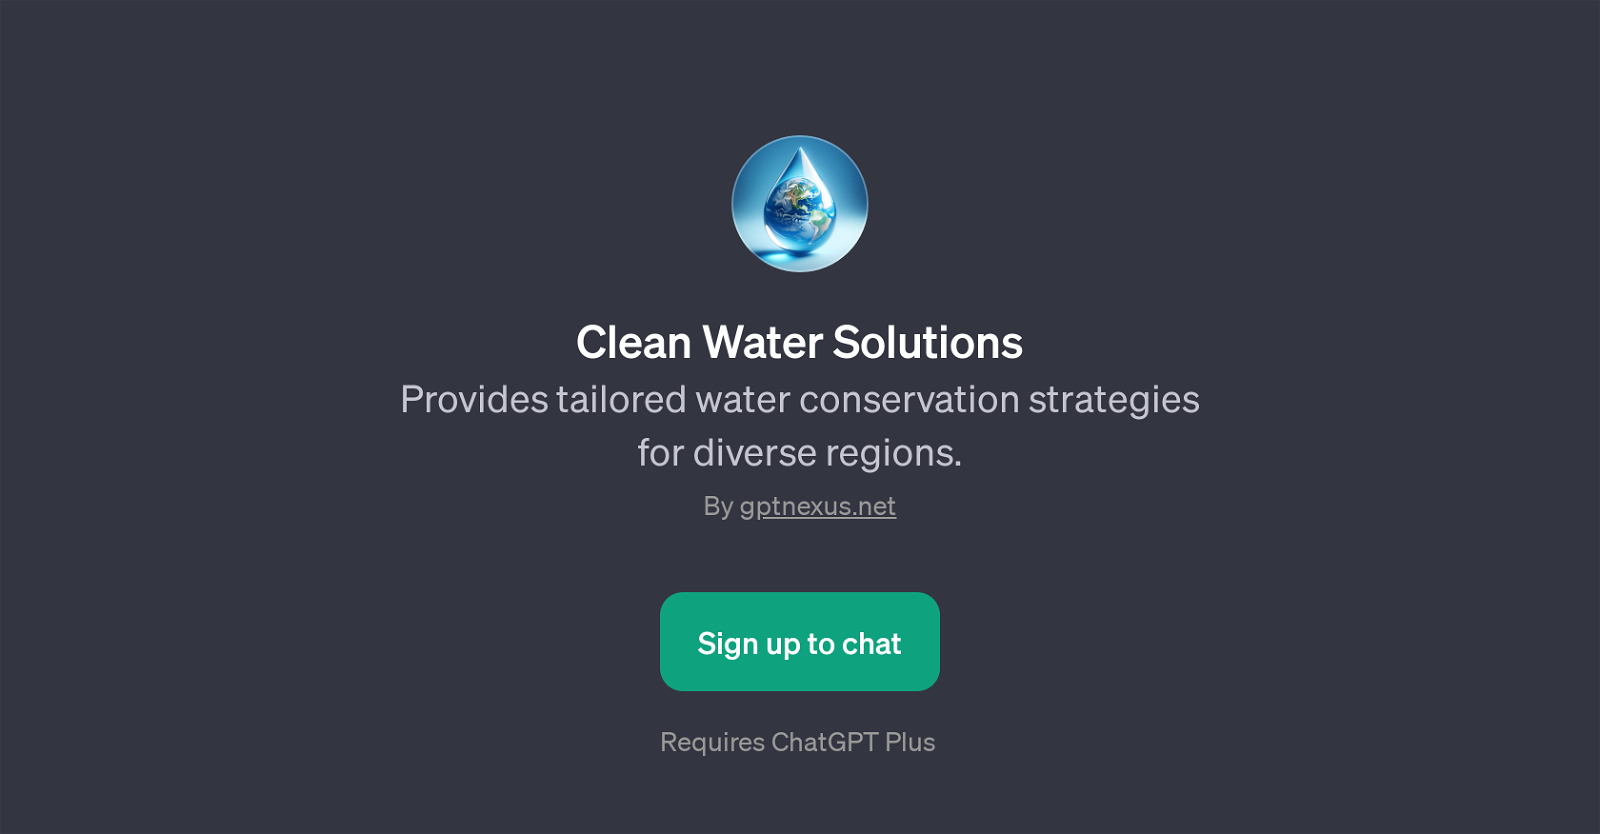 Clean Water Solutions website